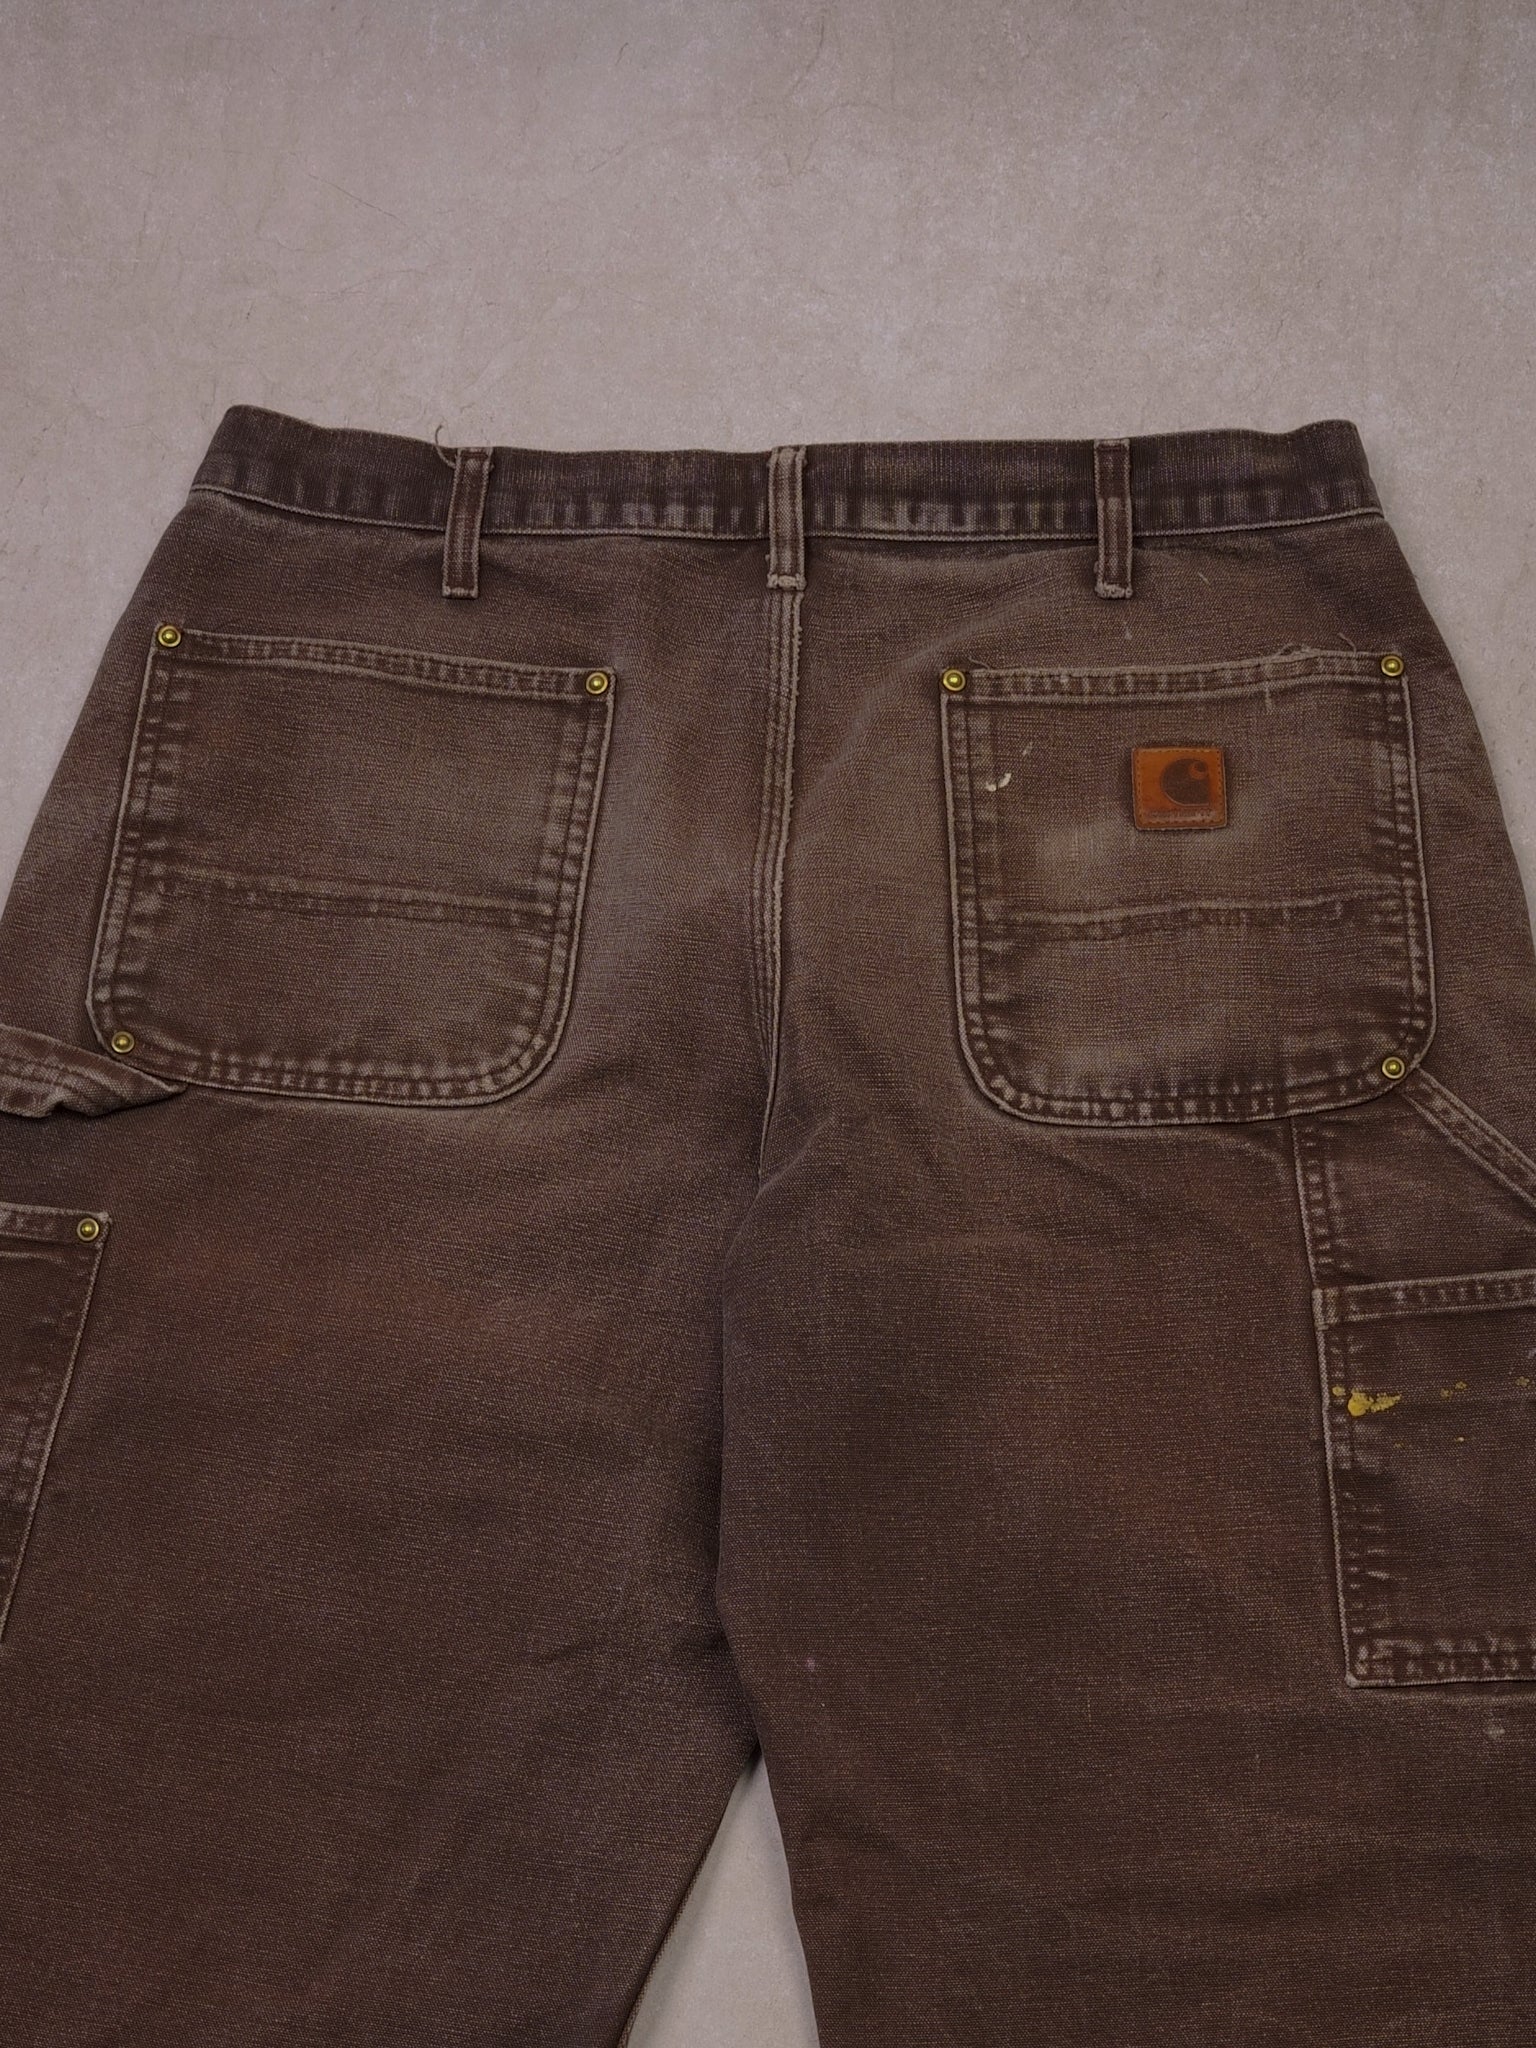 Vintage 90s Brown Double Knee Carhartt Original Fit Carpenter Pants (34x30)